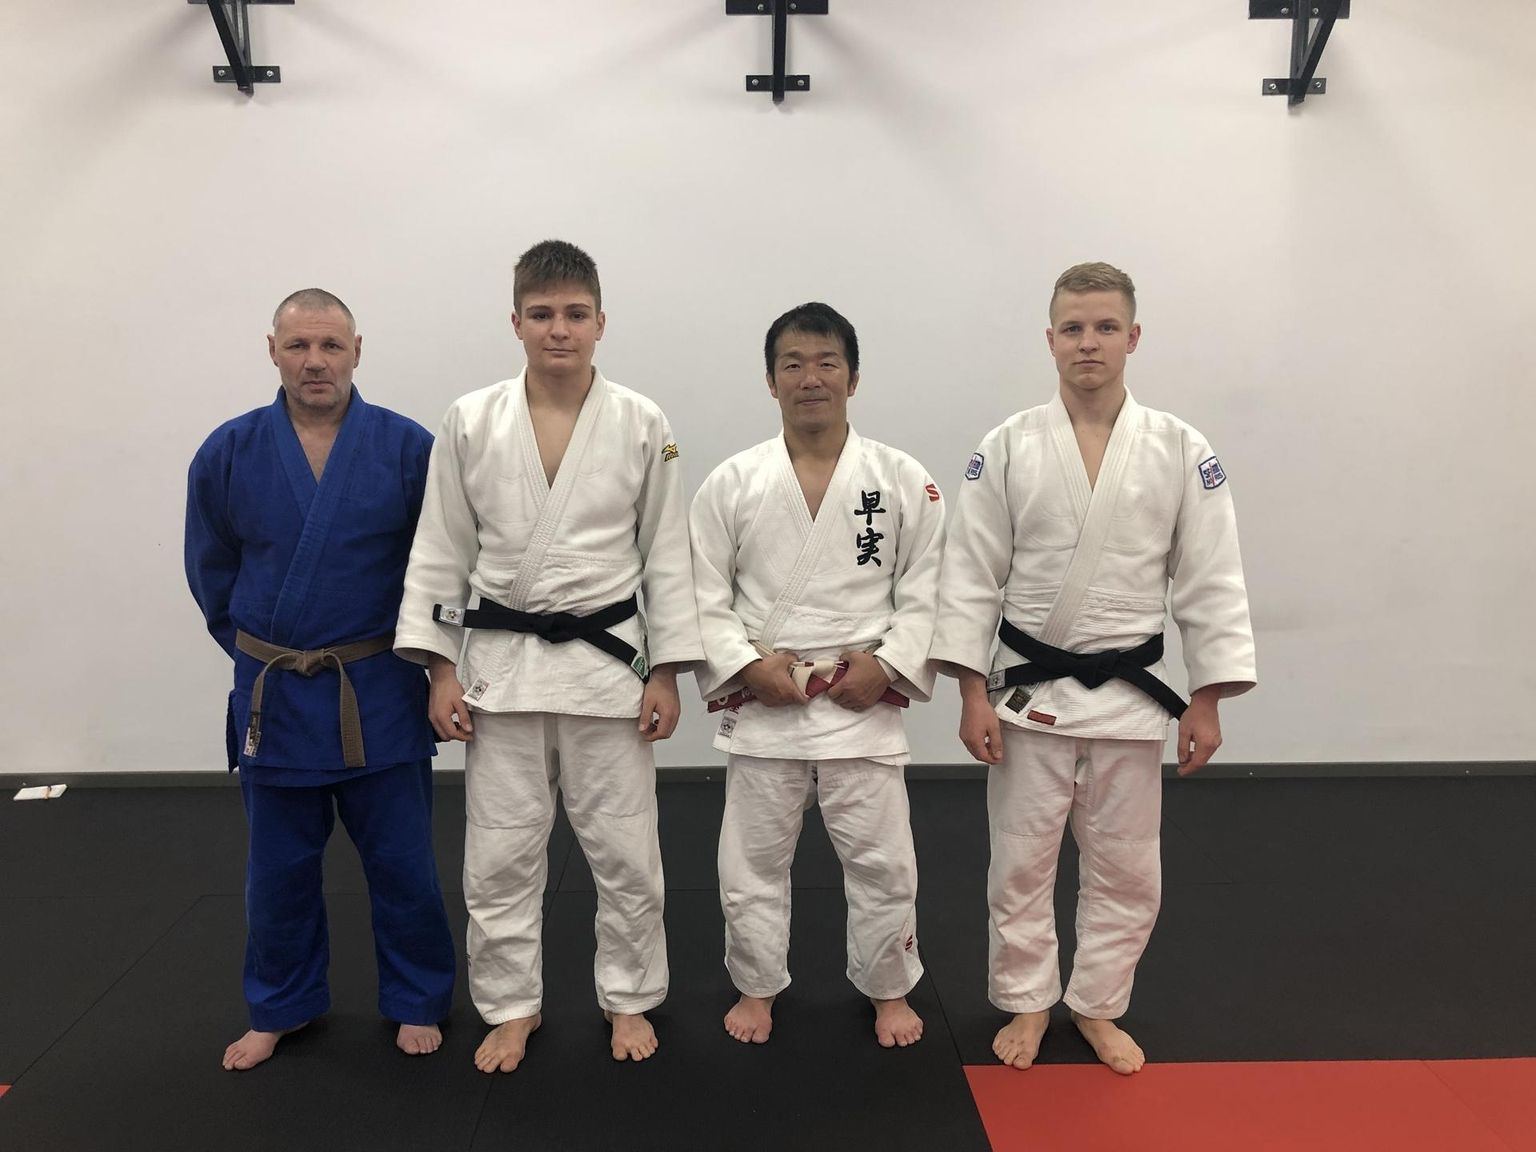 Judoseminaril osalesid Rei klubist treener Ilmar Koort (vasakult), Rei parim noorjudoka Randel Päästel ja treener Ants Tiido.